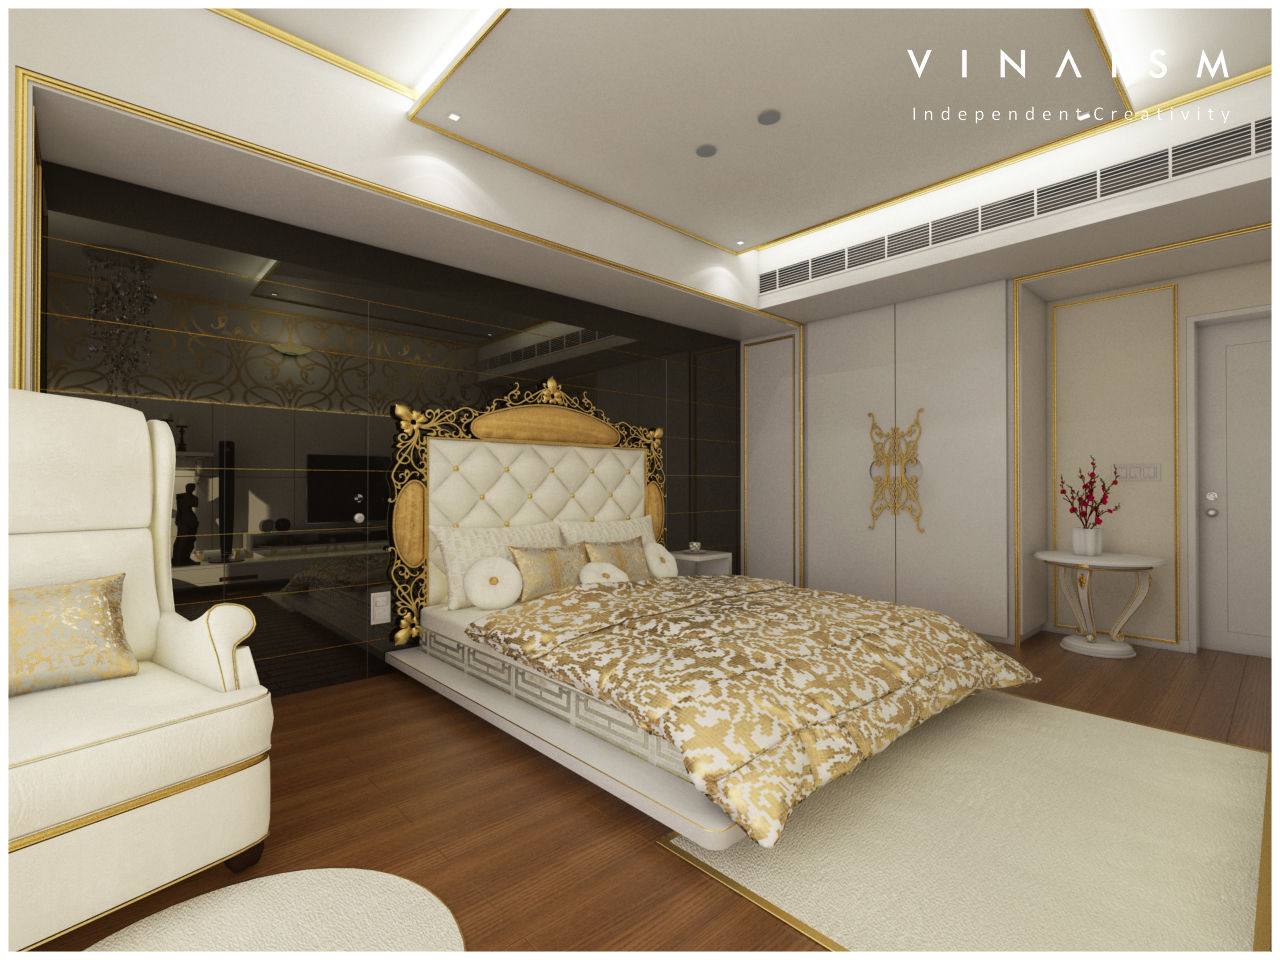 white n golden, V I N A I S M V I N A I S M Bedroom Comfort,Building,Wood,Interior design,Flooring,Pillow,House,Decoration,Floor,Bed frame